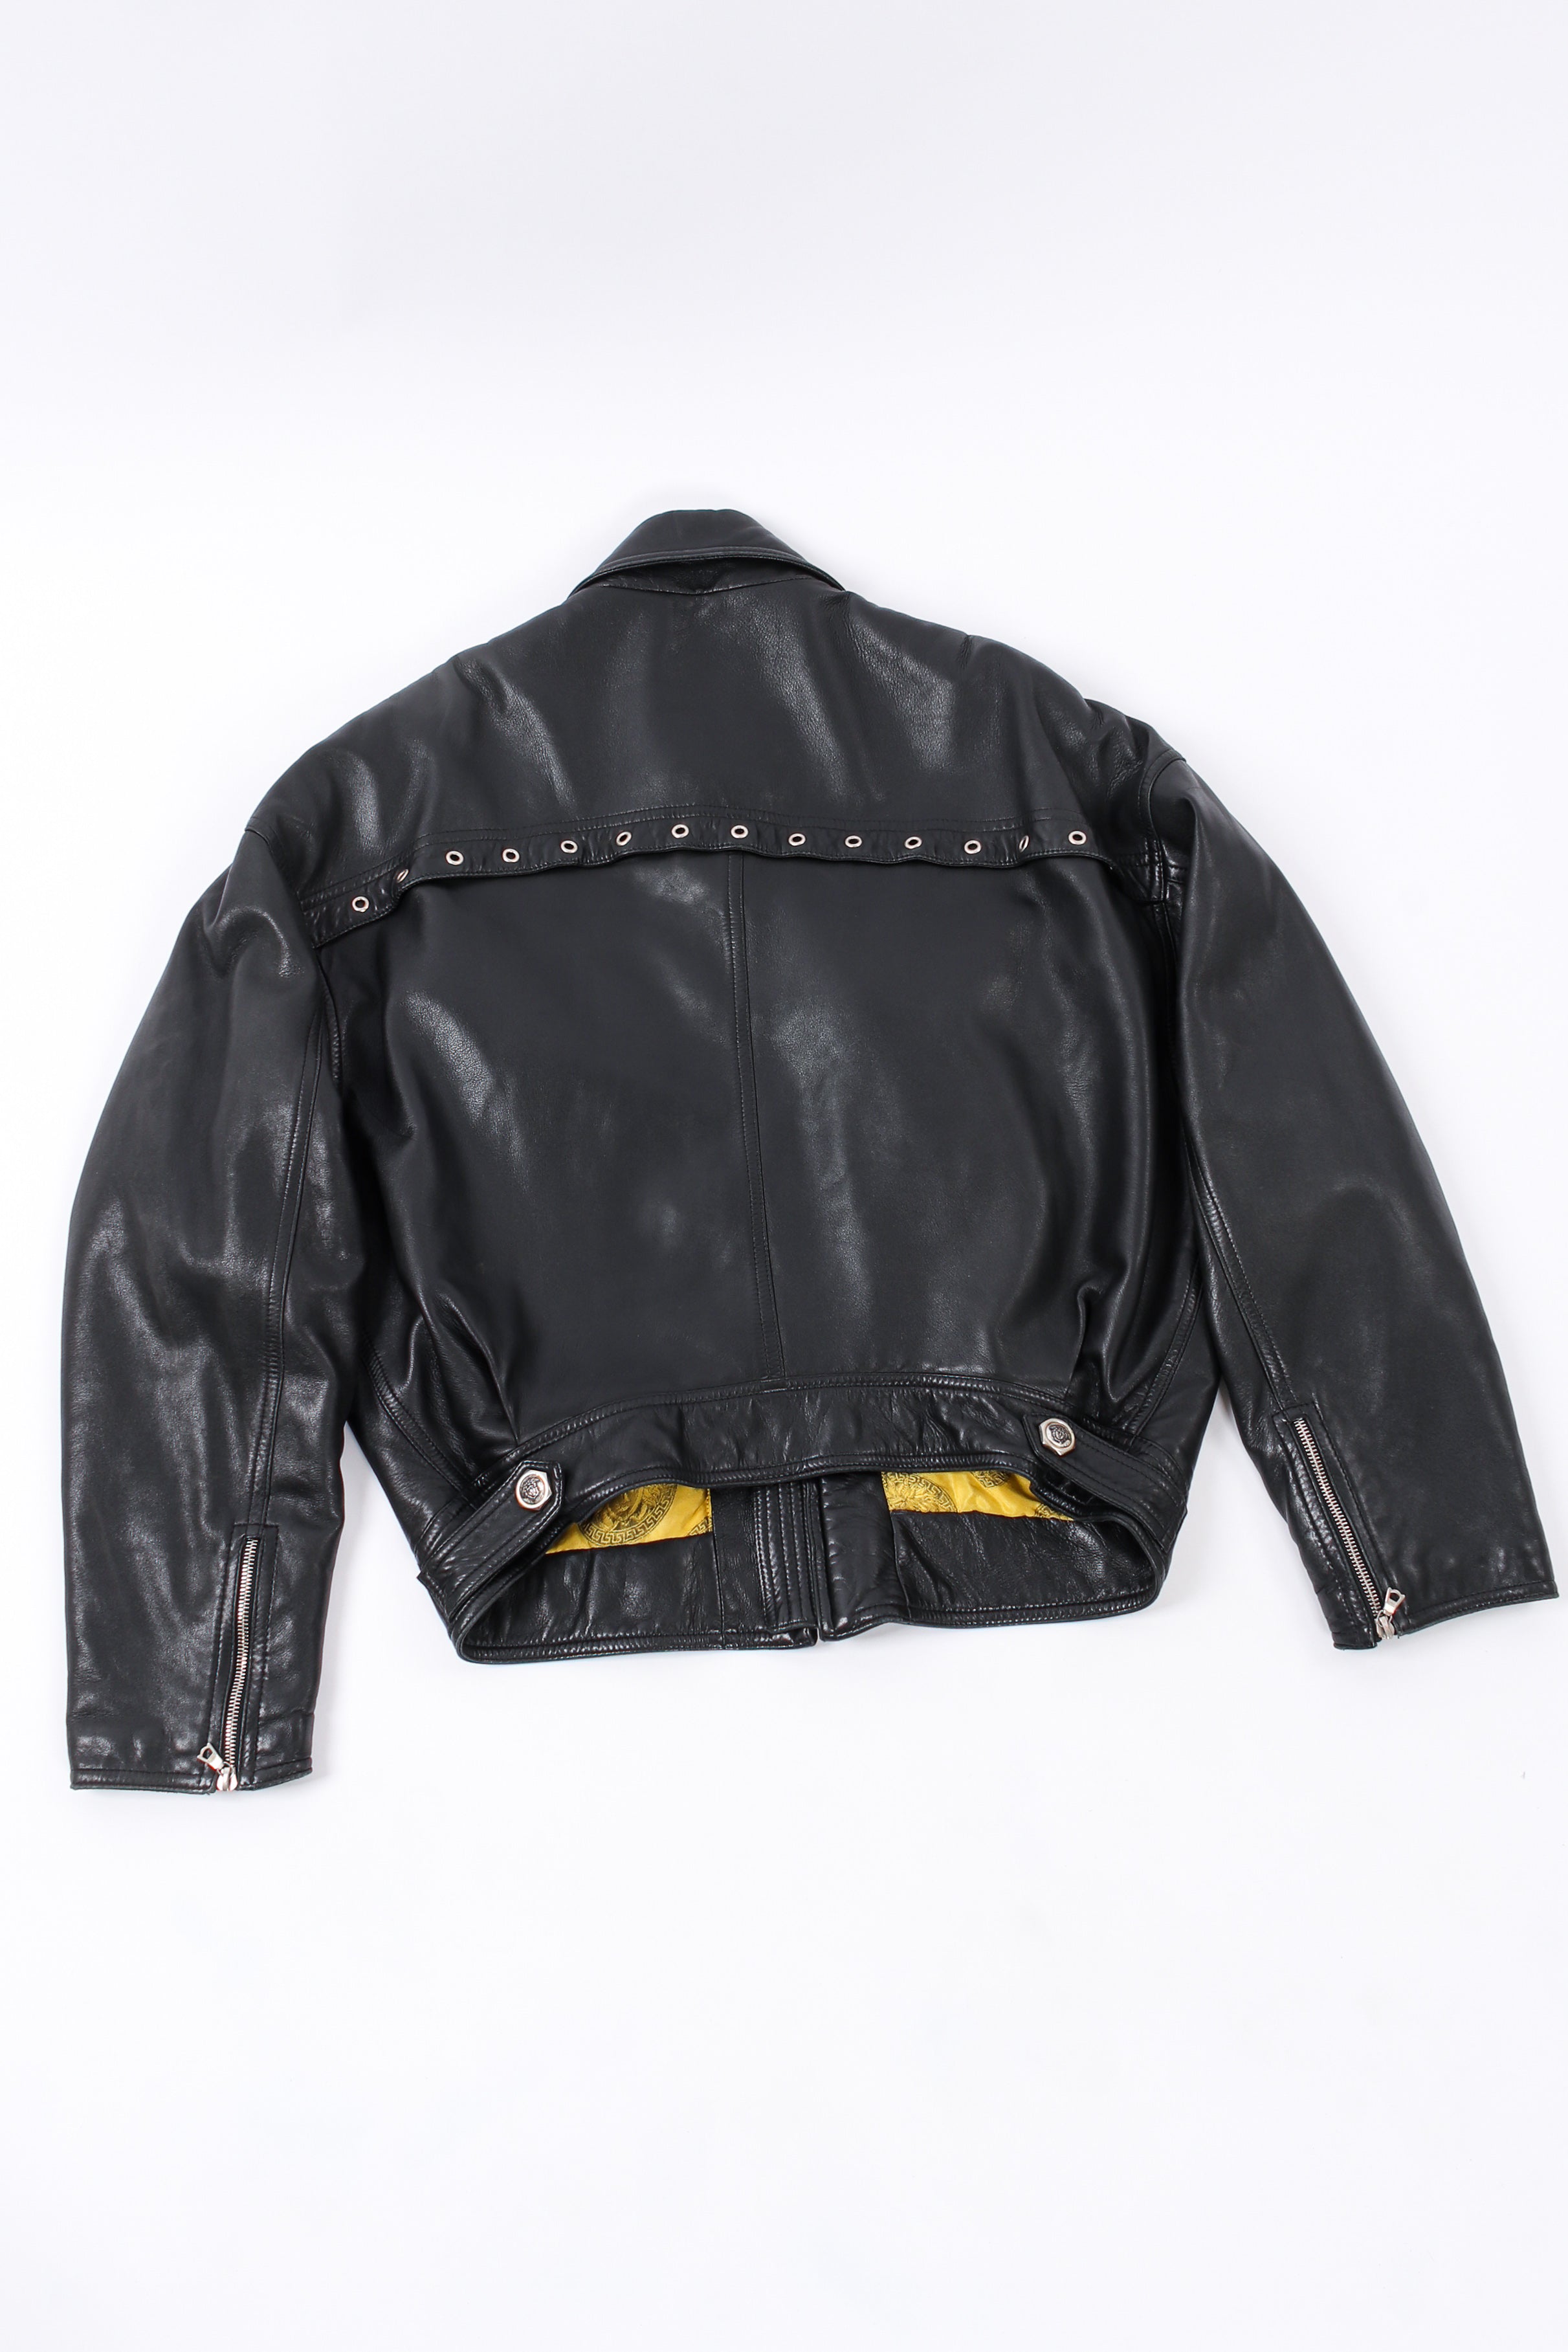 Vintage Gianni Versace Leather Bomber Jacket back flat lay @ Recess LA